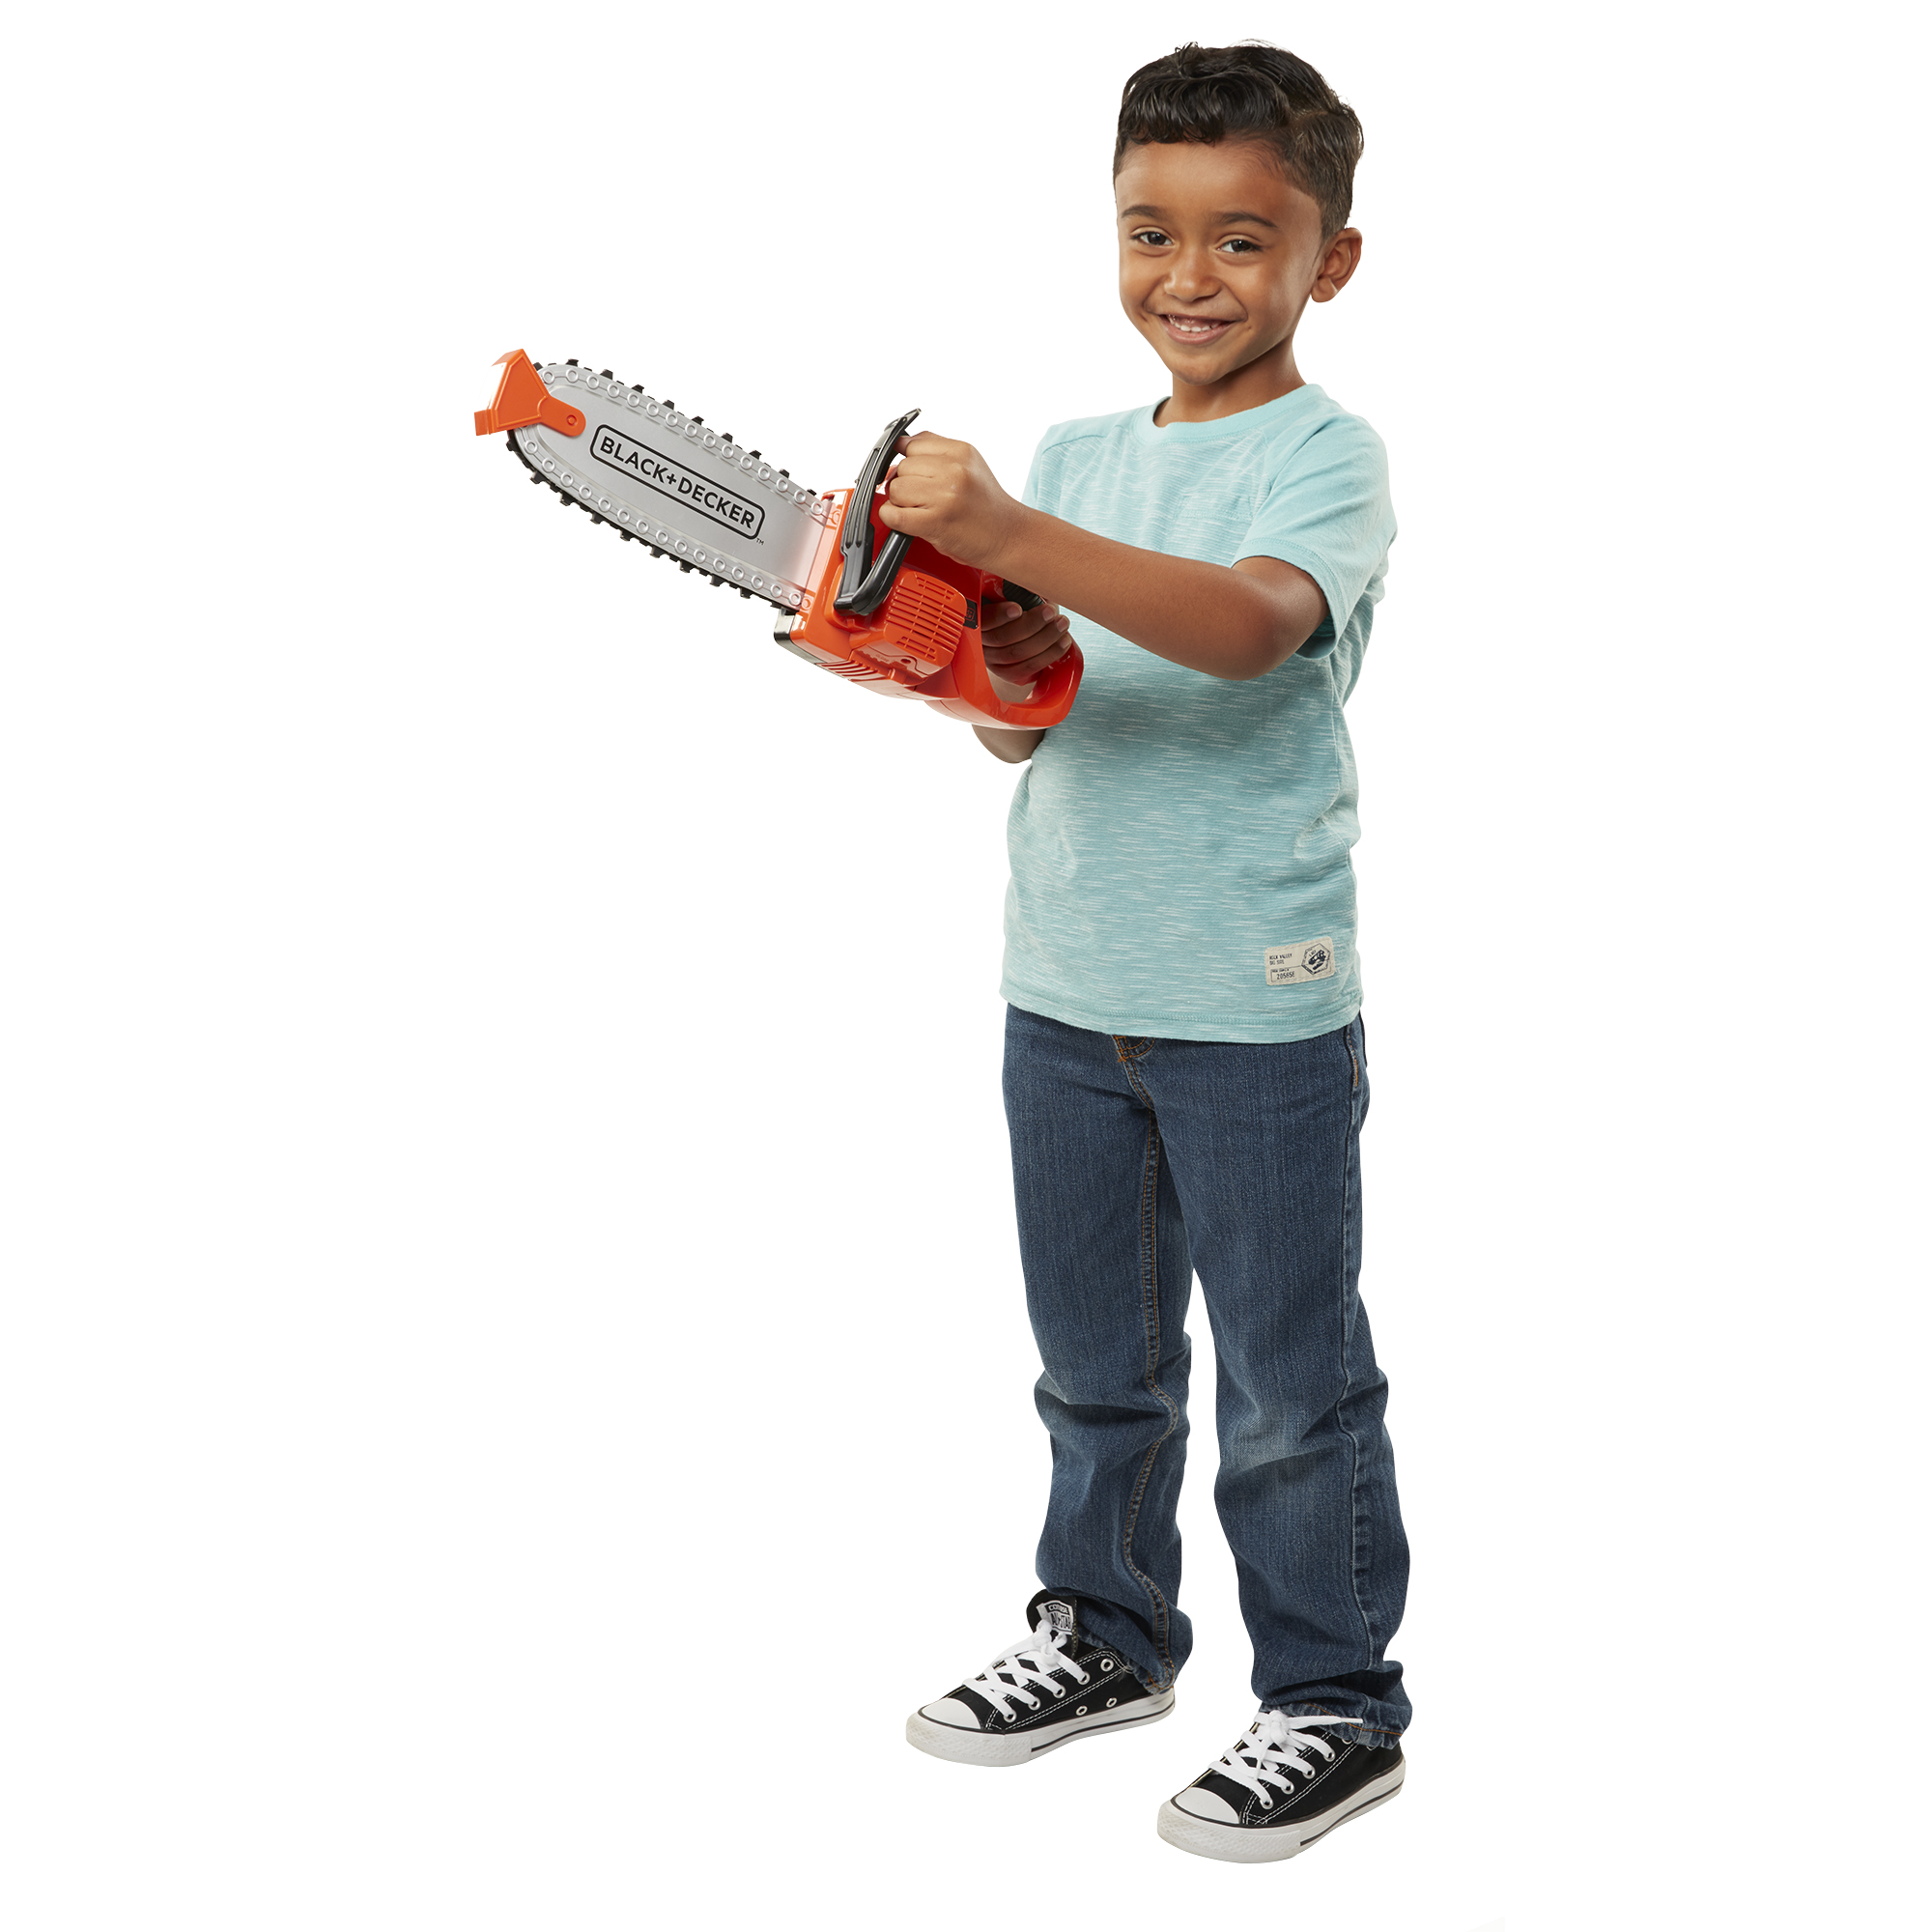 Junior Chainsaw Power Tool - JAKKS Pacific, Inc.